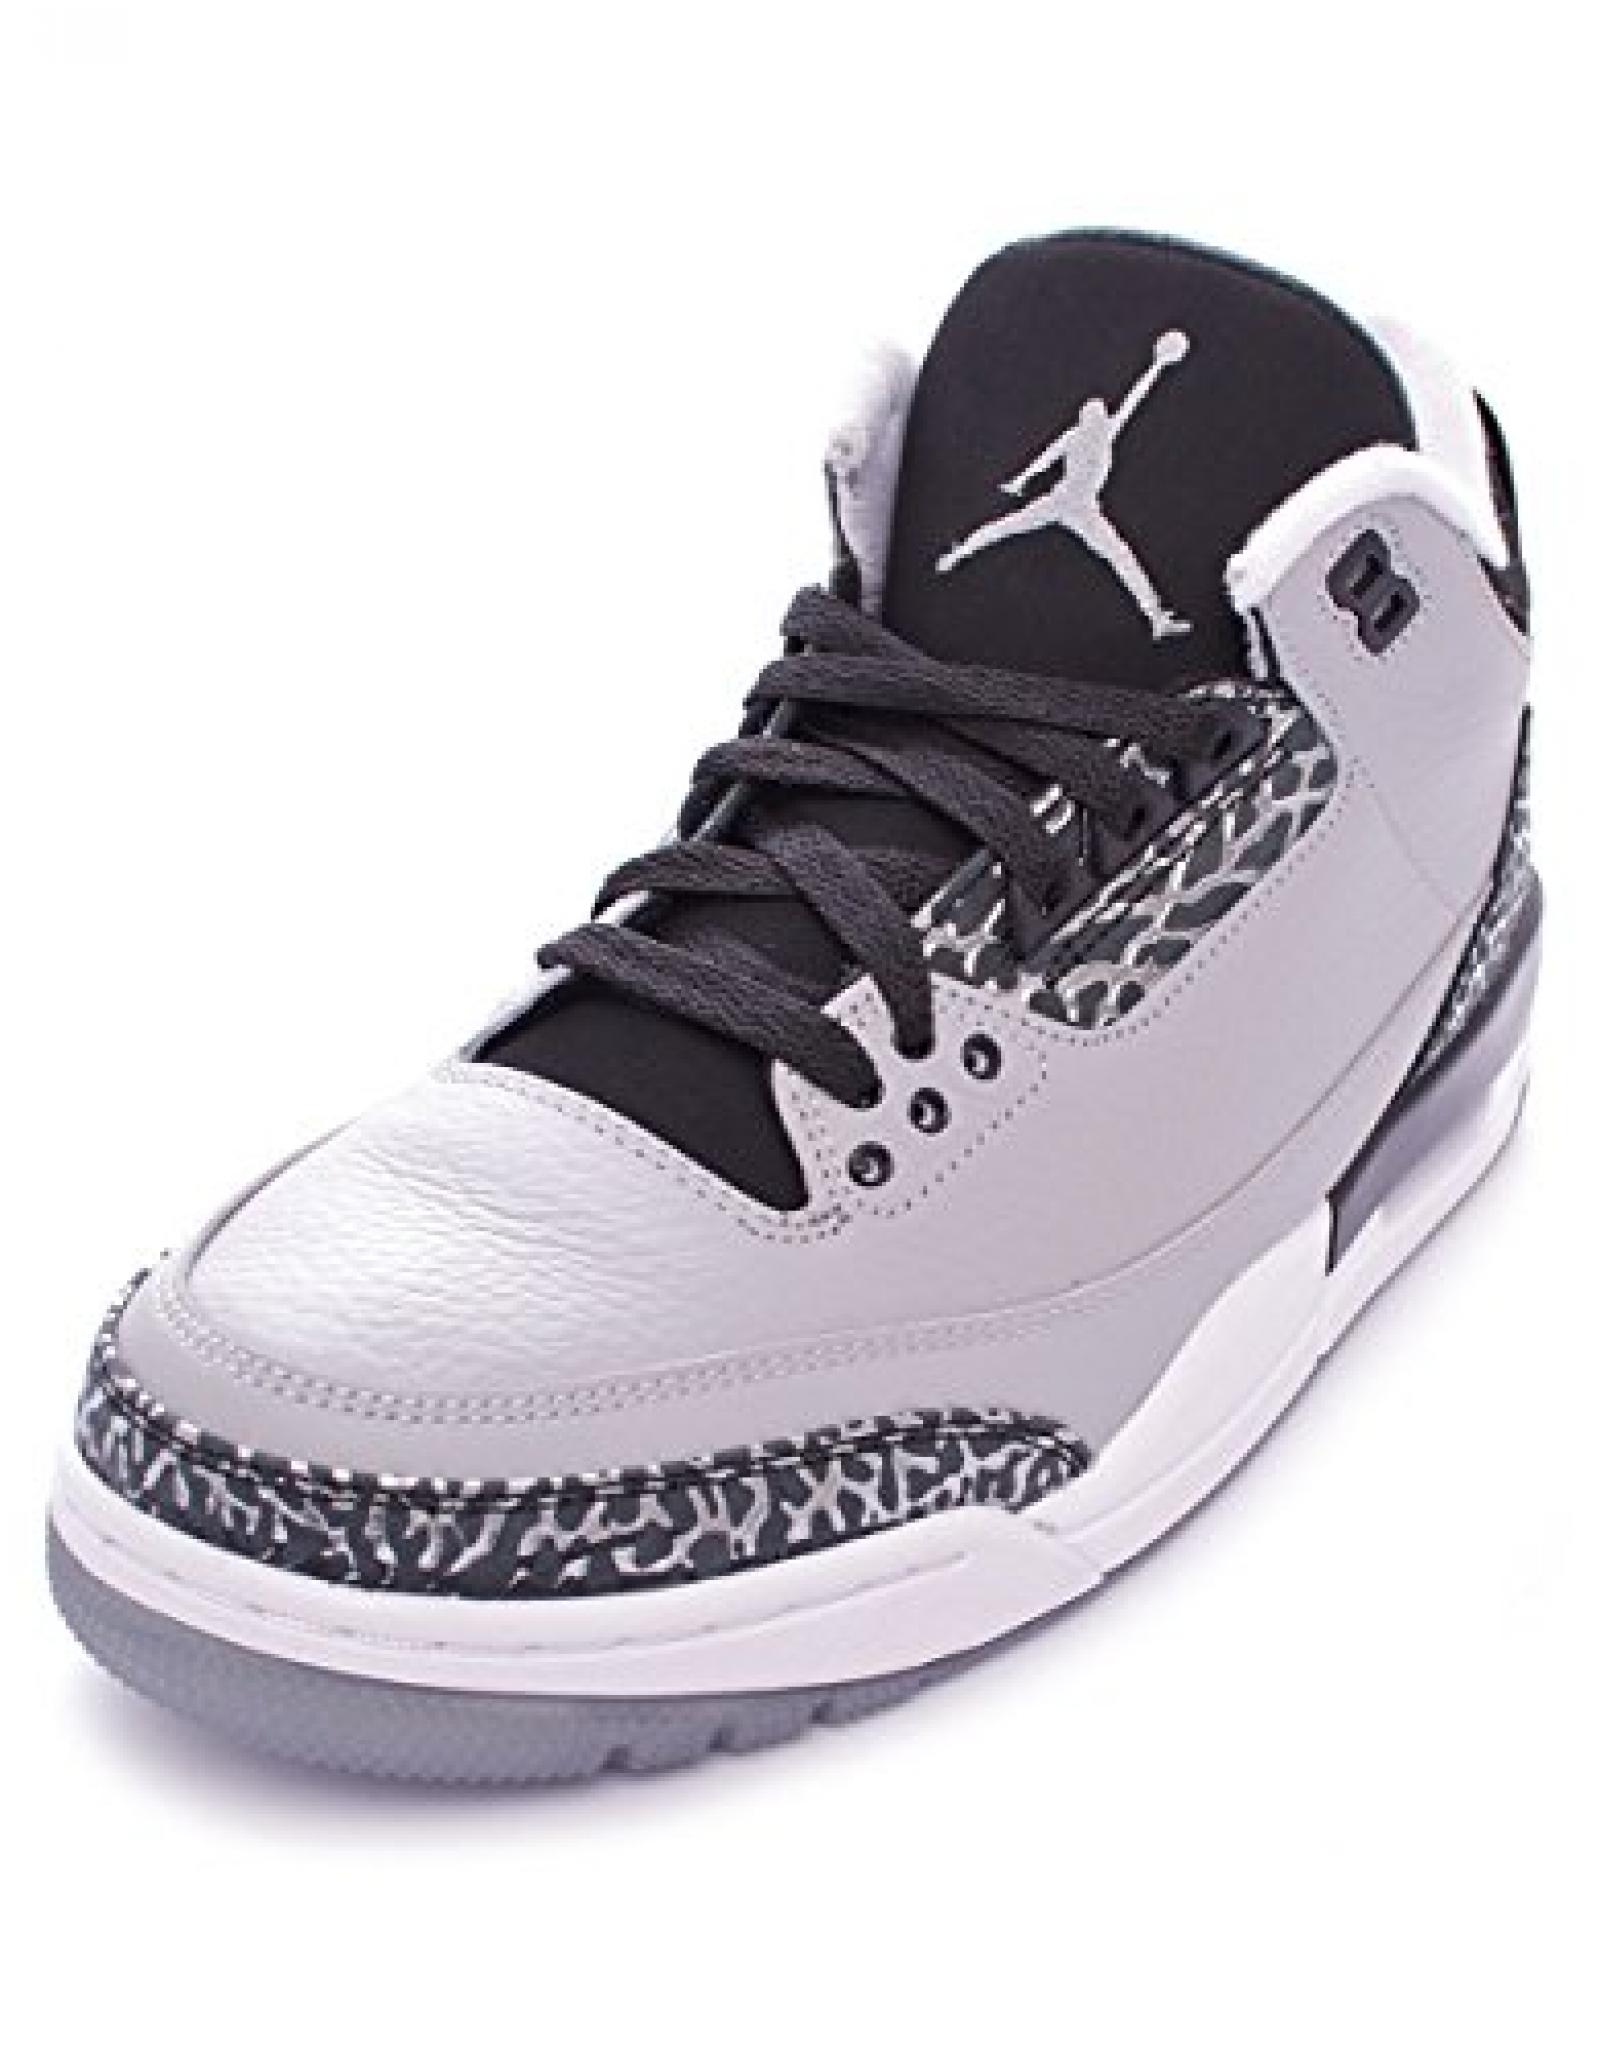 Jordan Air Jordan 3 Retro unisex erwachsene, leder, sneaker high 